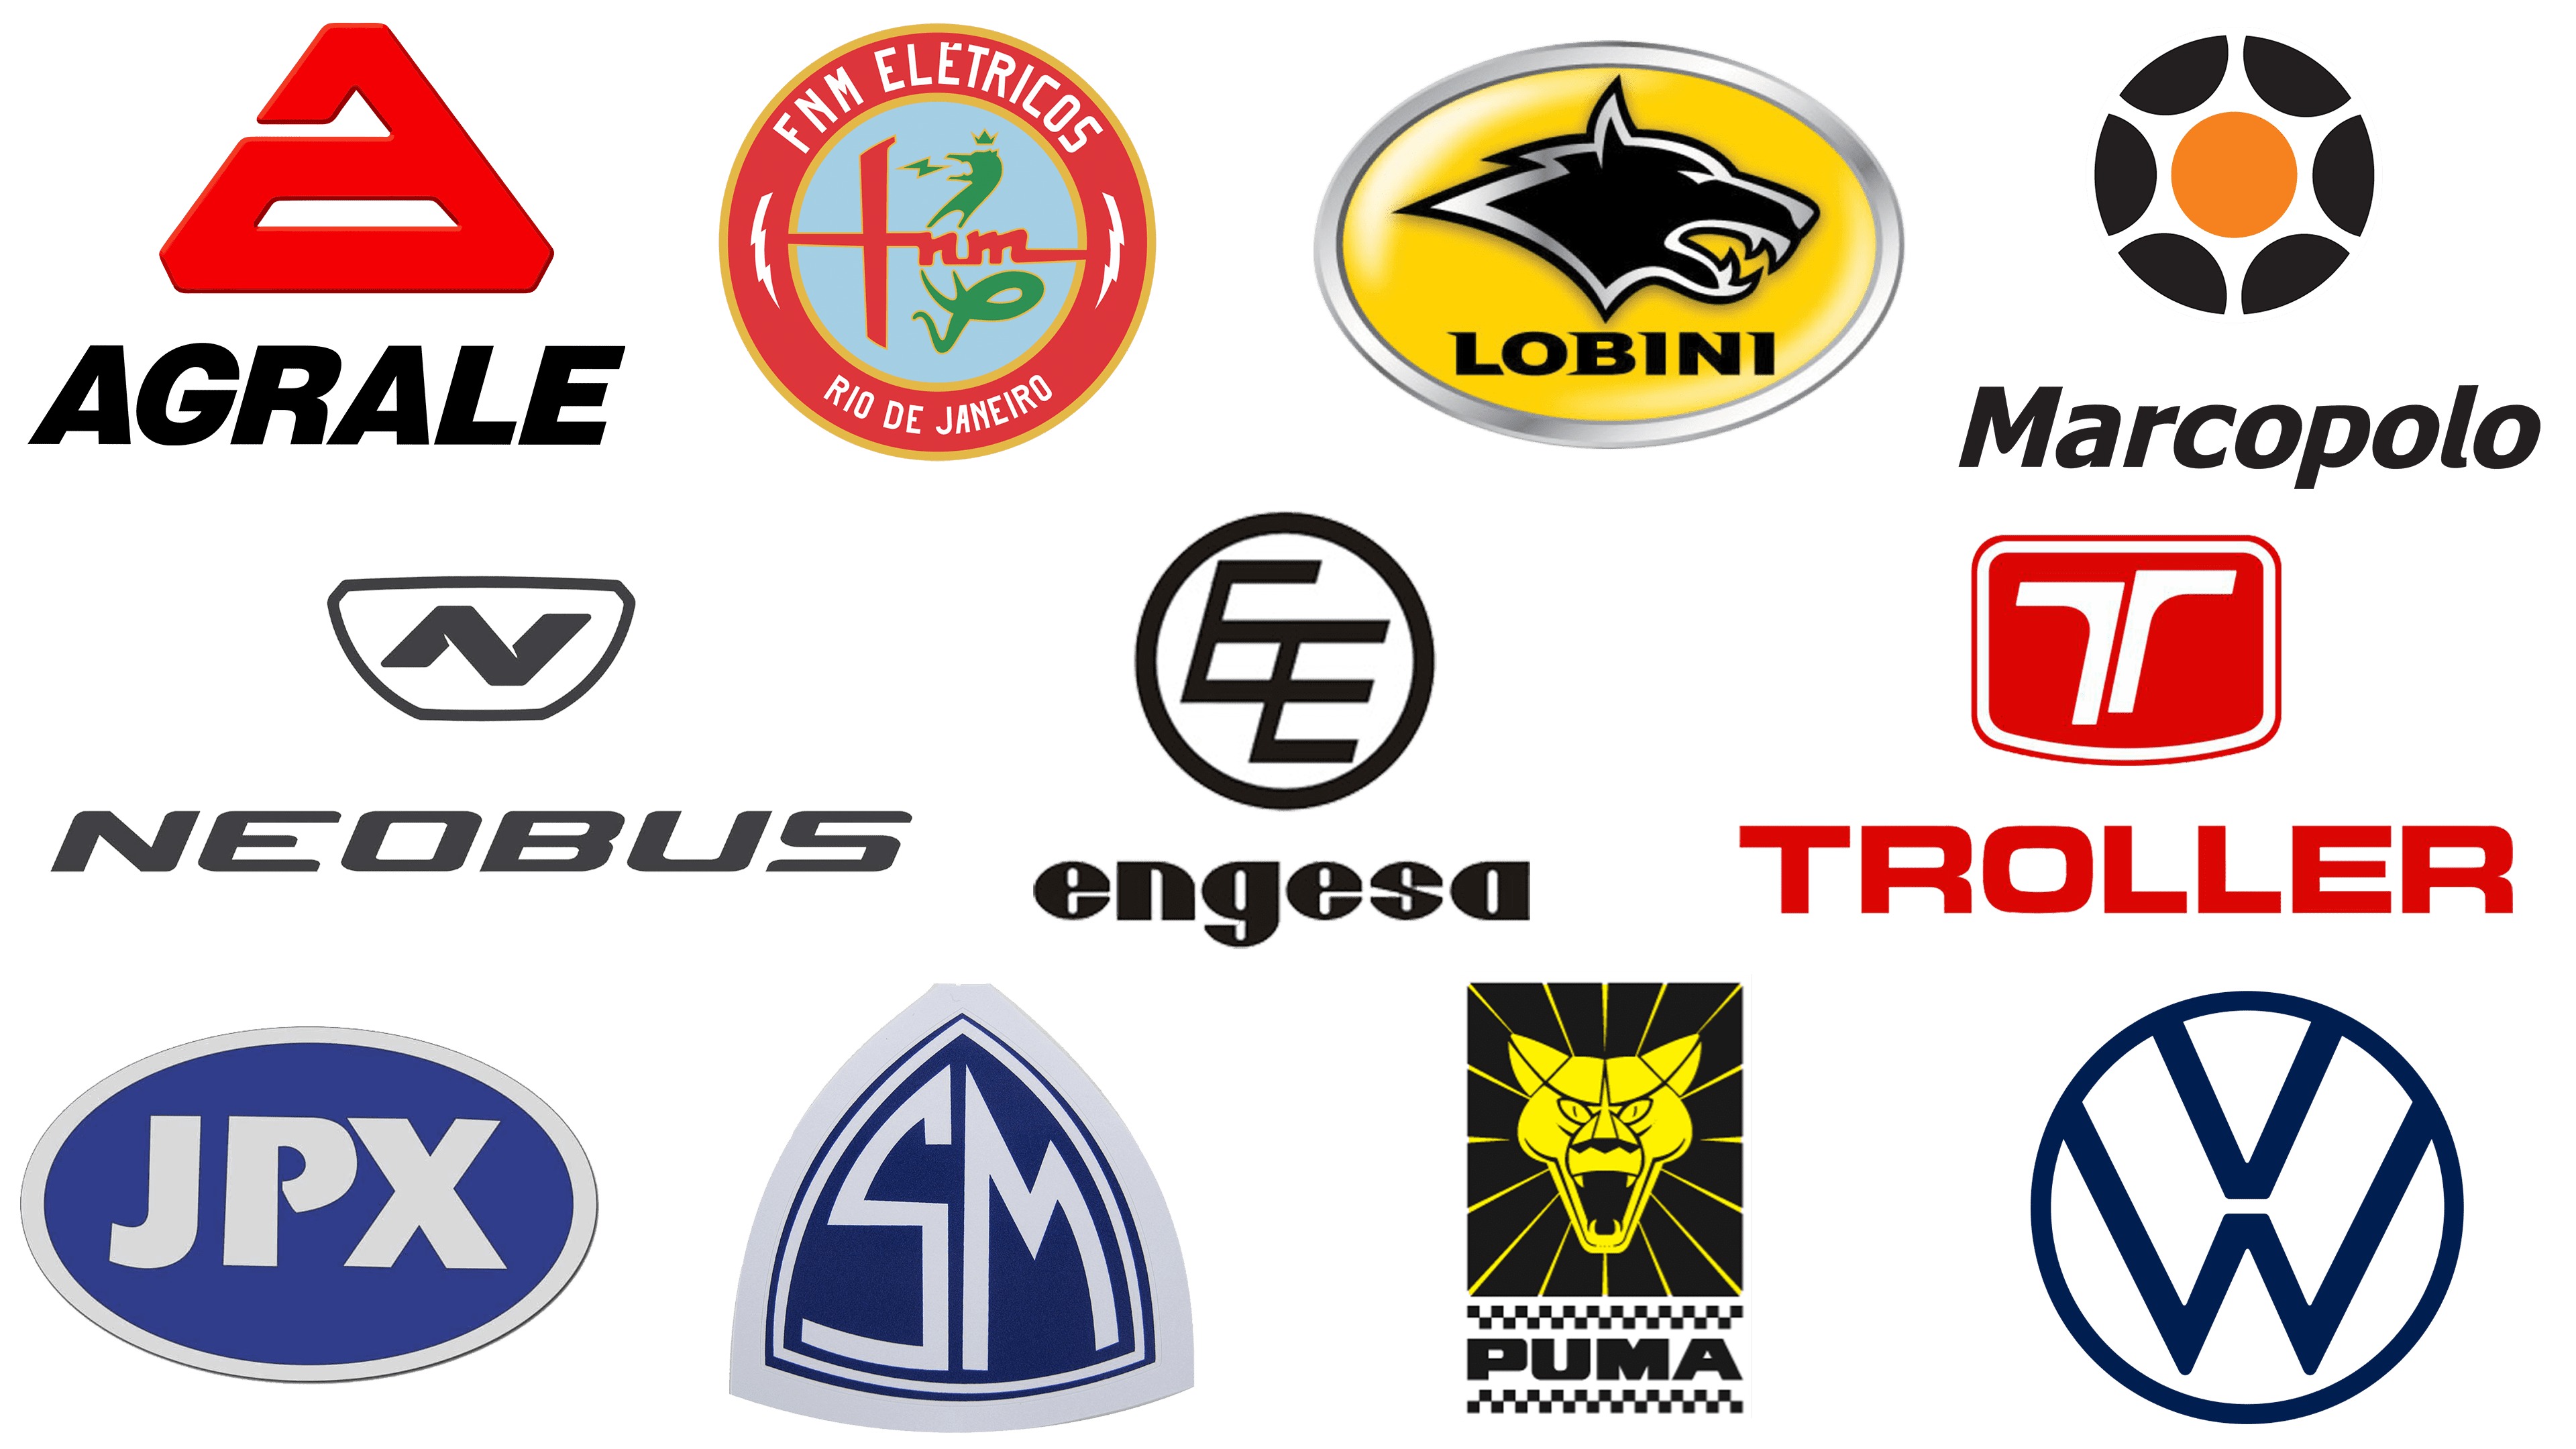 Car brands collection. Car brand logo. Vector car emblem Stock